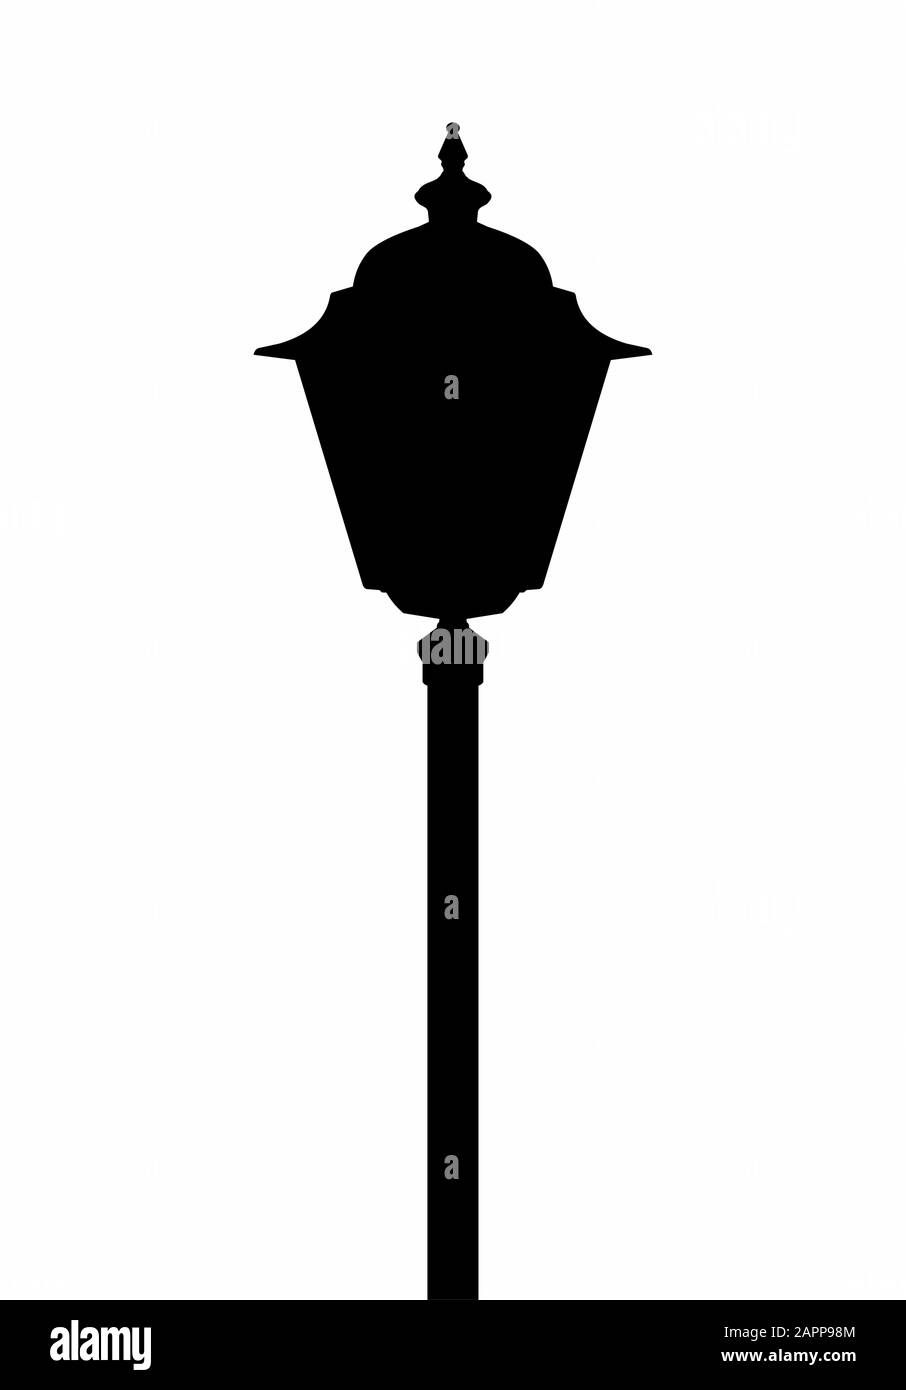 Old street light silhouette Stock Vector